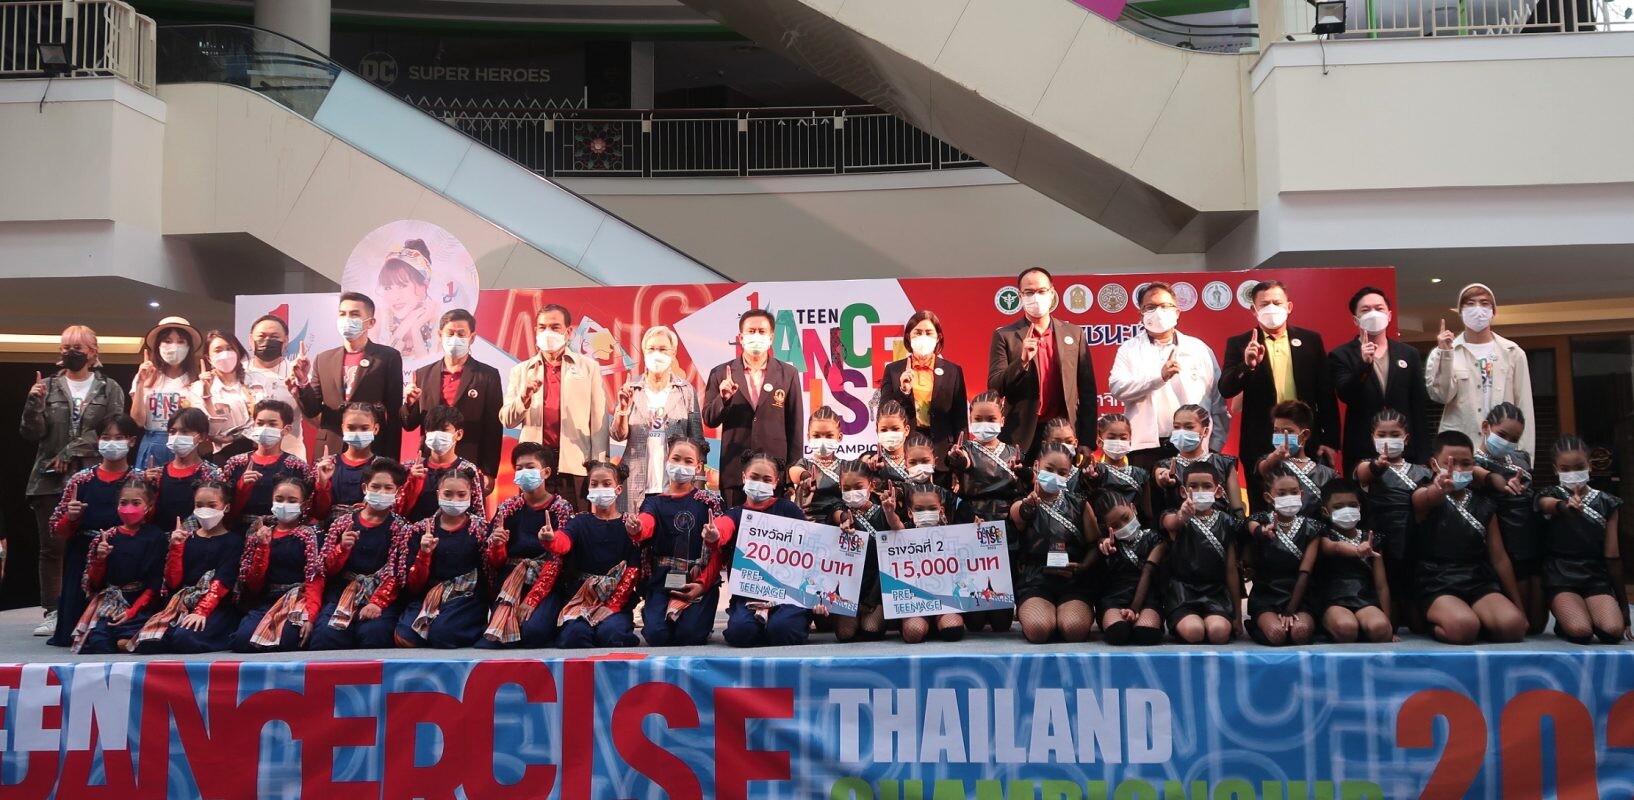 TO BE NUMBER ONE TEEN DANCERCISE THAILAND CHAMPIONSHIP 2022 รอบชิงชนะเลิศ ระดับภาคใต้